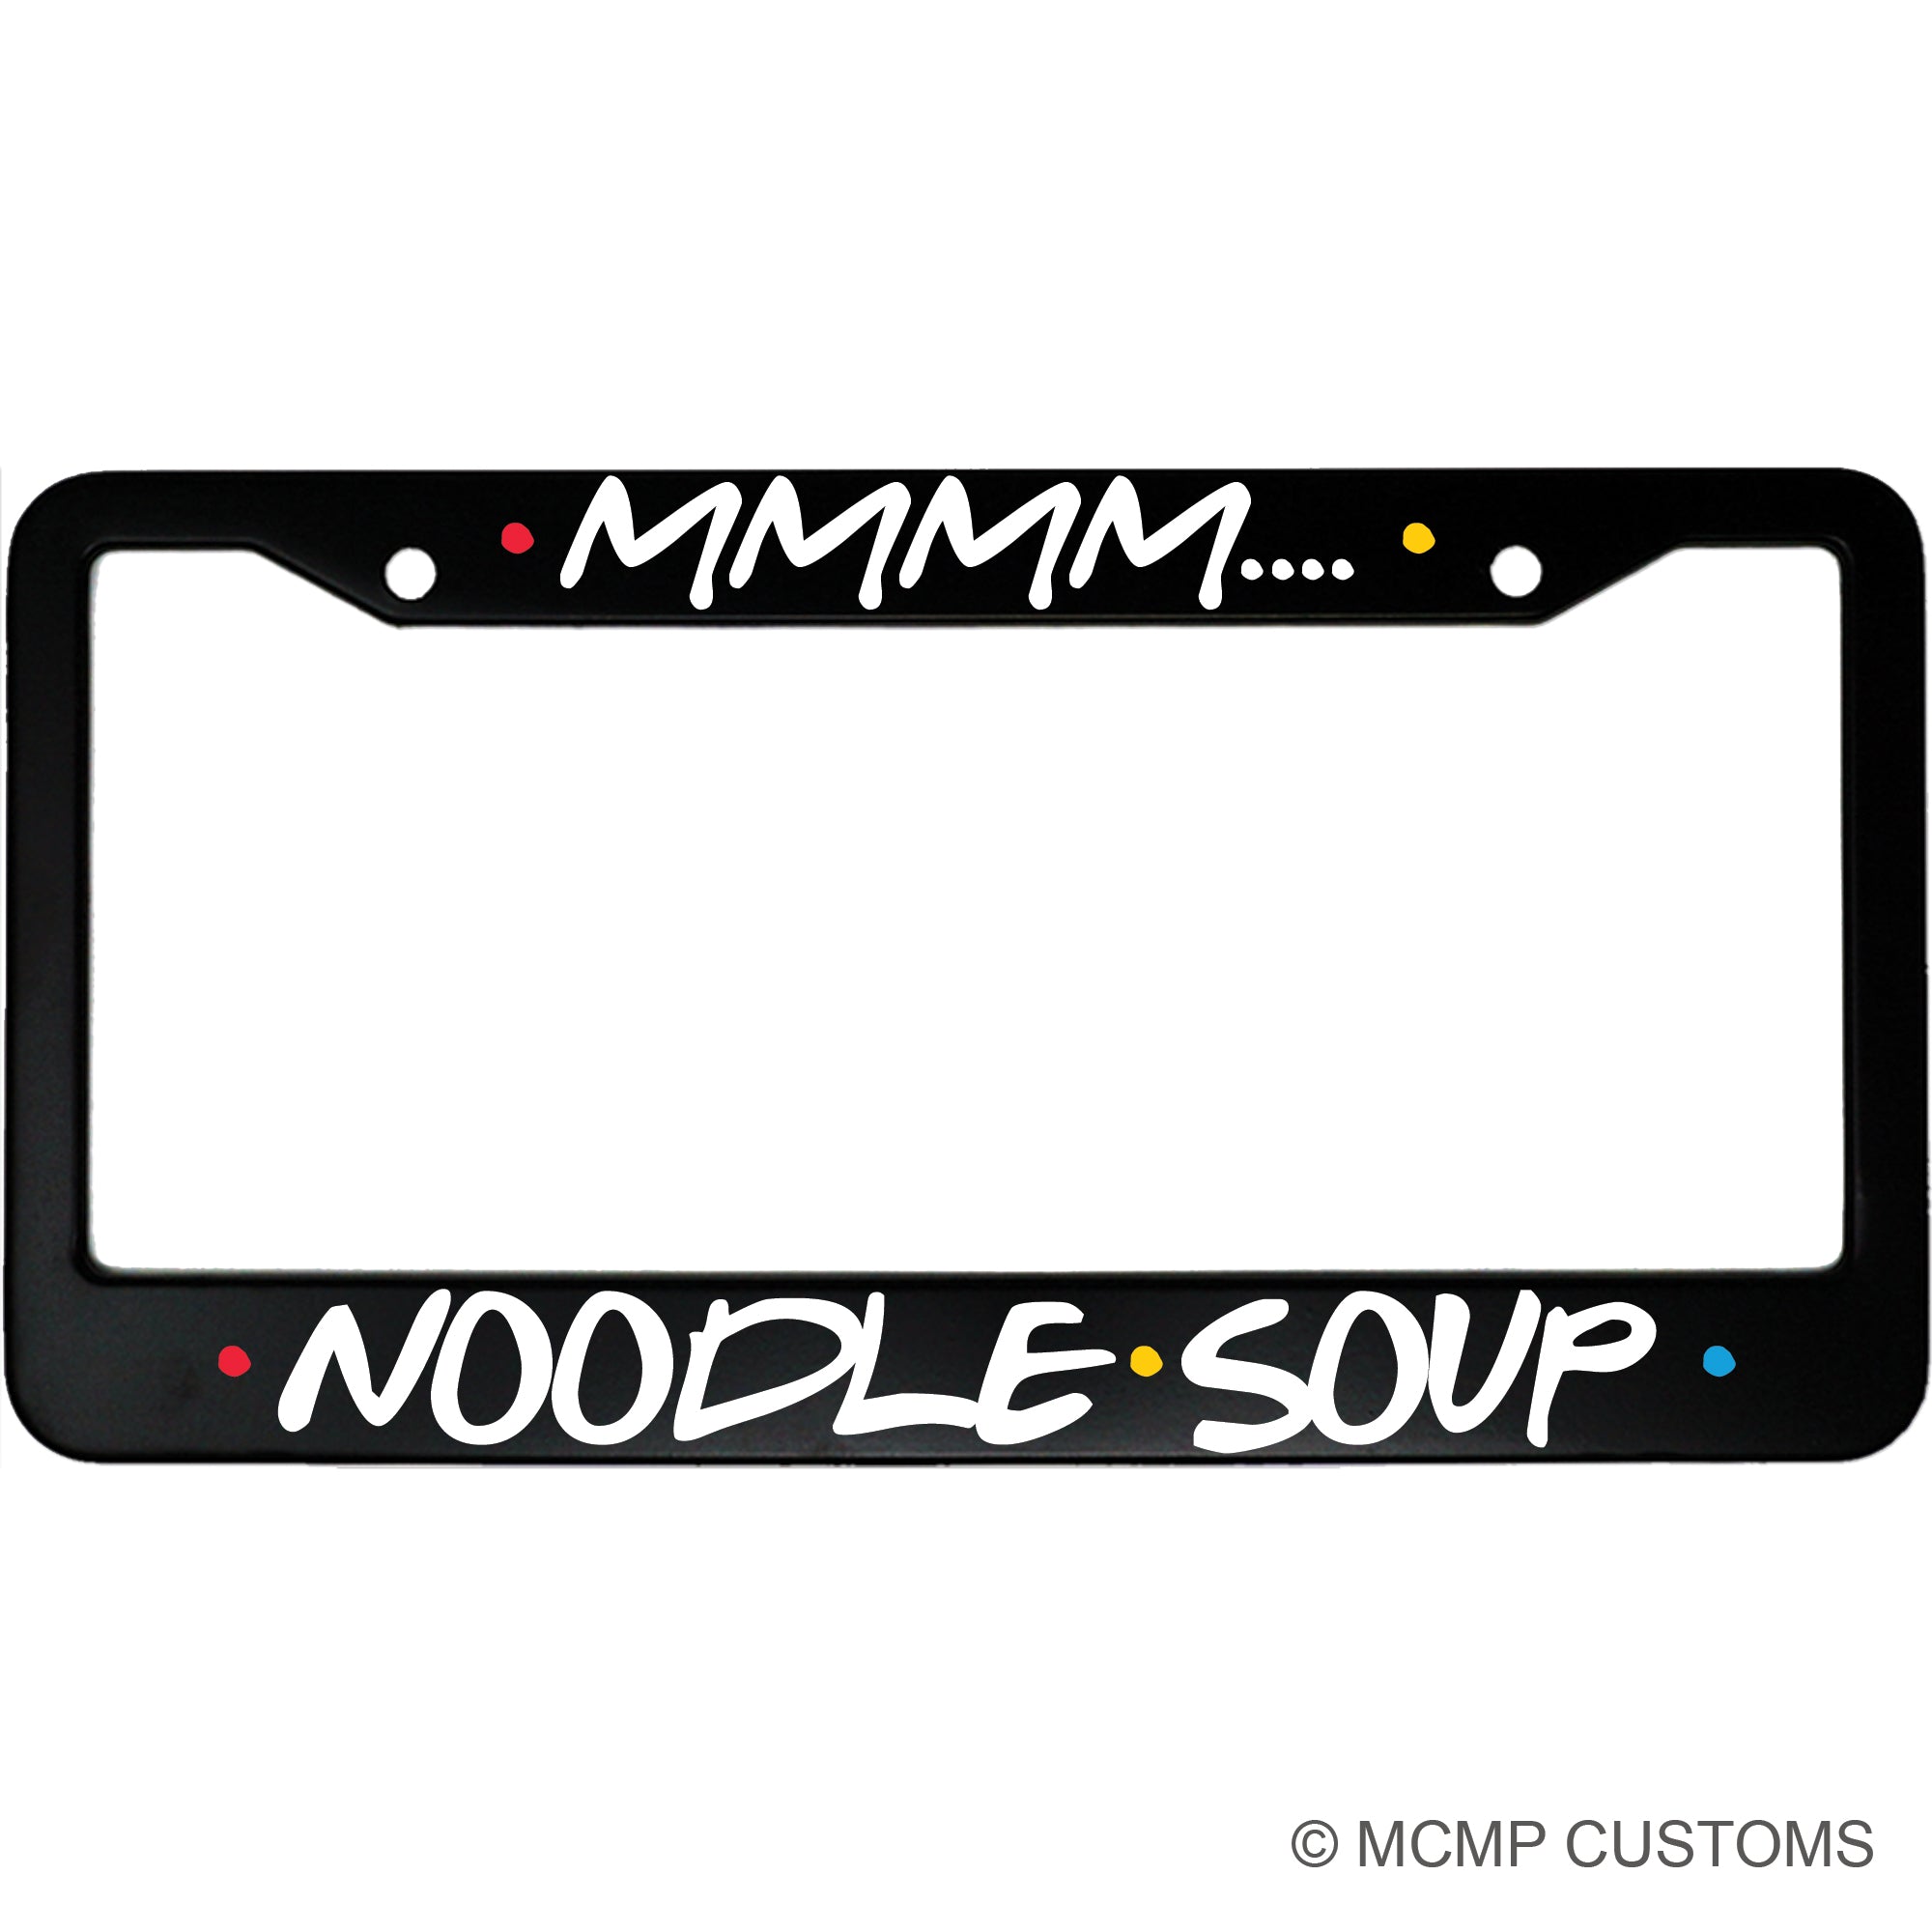 Mmmm.... Noodle Soup